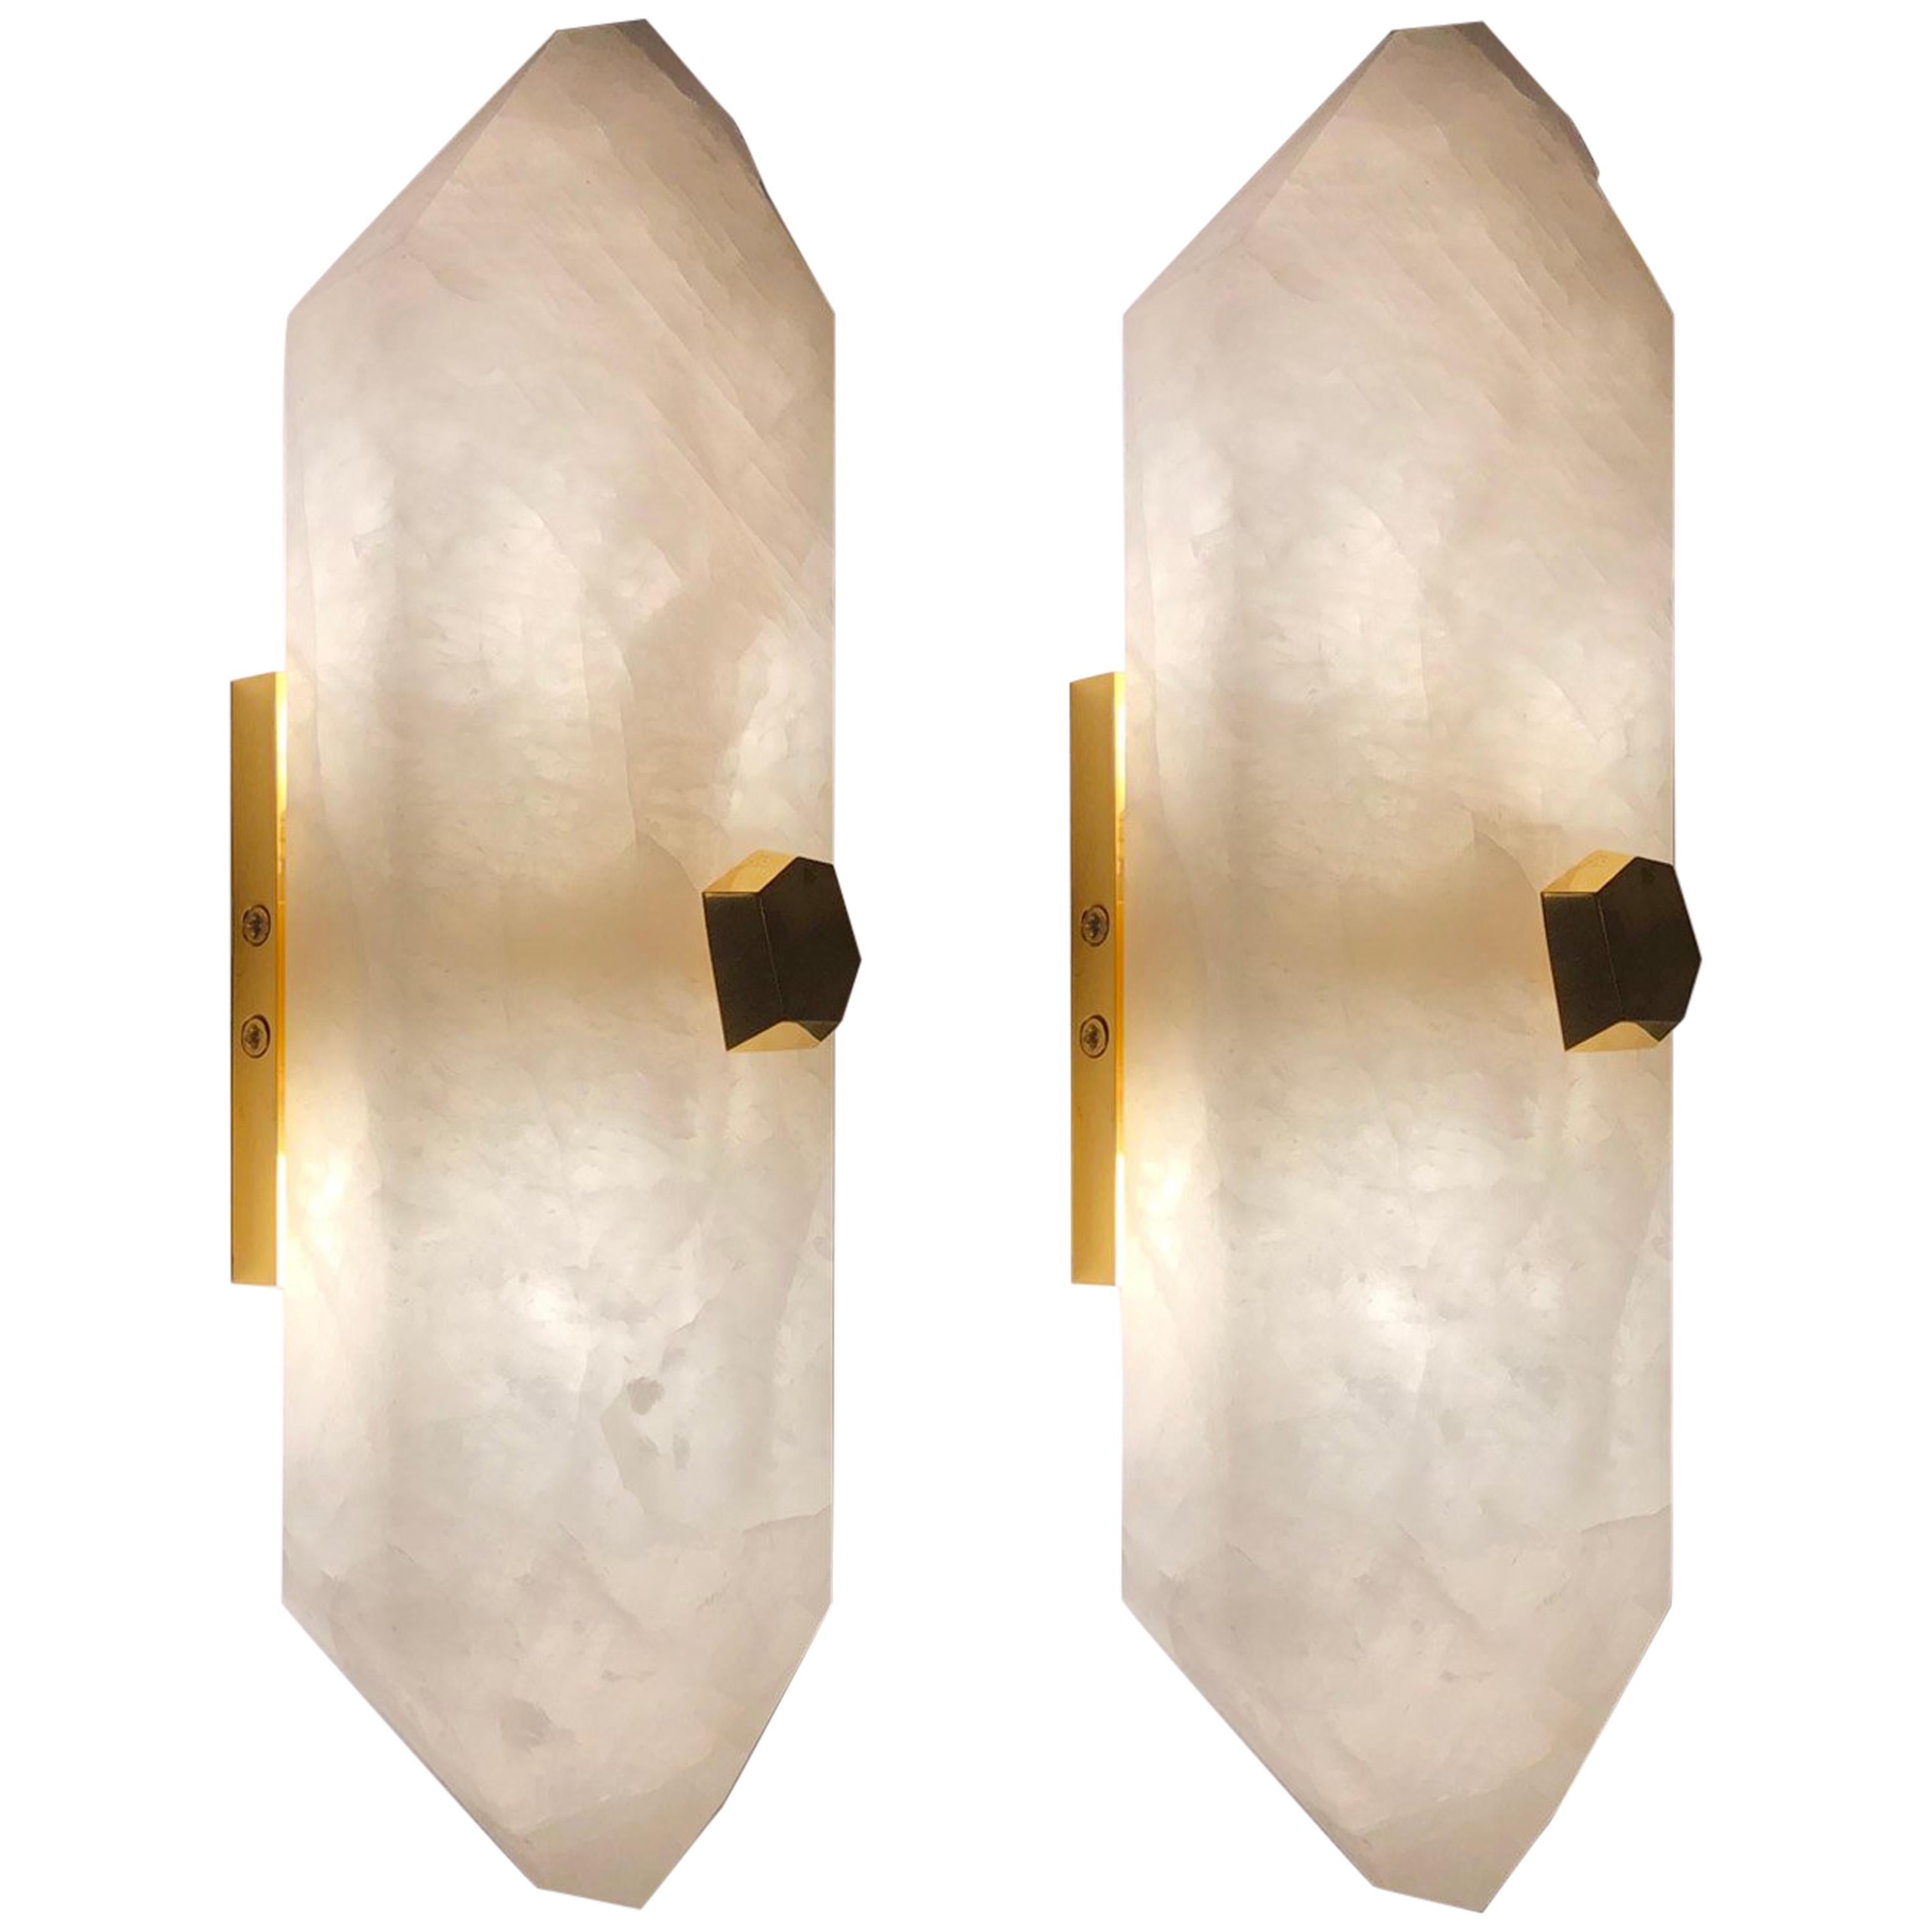  Diamond Form Rock Crystal Sconces by Phoenix For Sale